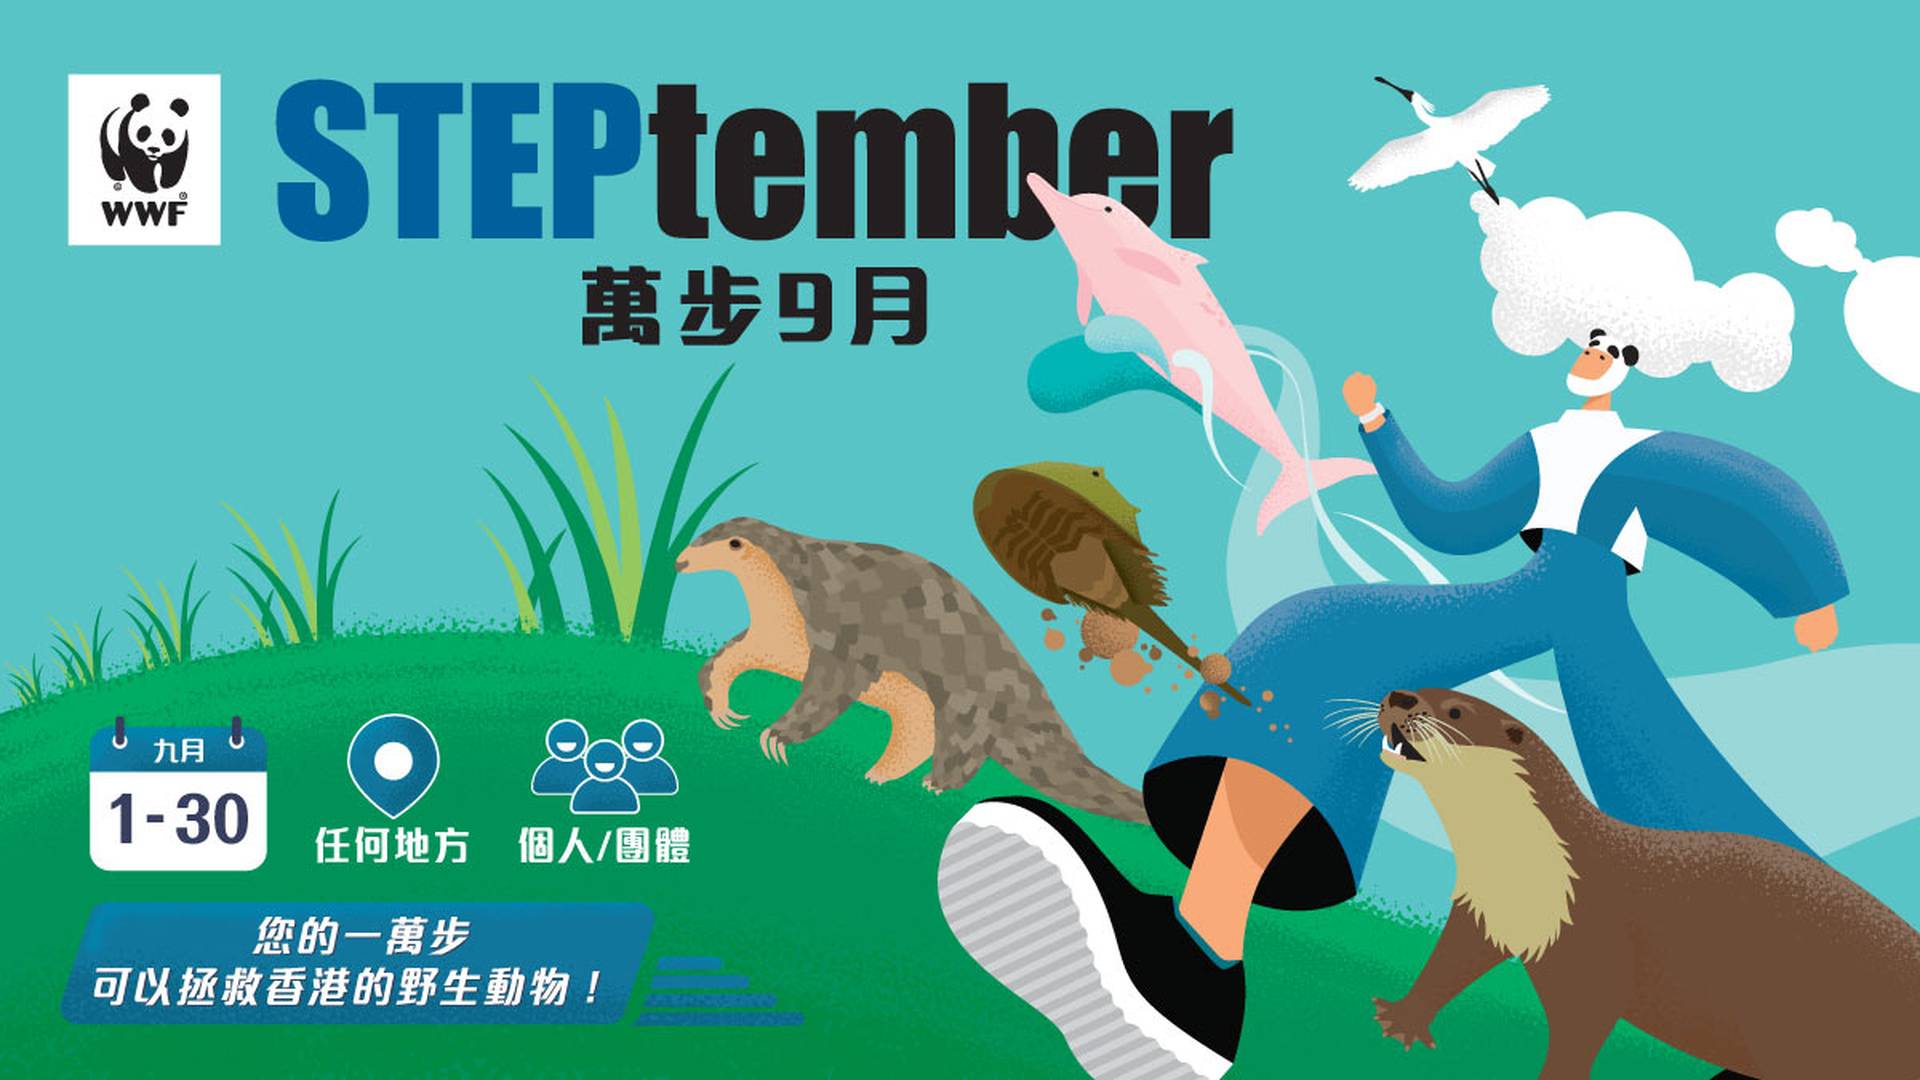 WWF STEPtember「萬」步九月 - 線上步行籌款活動